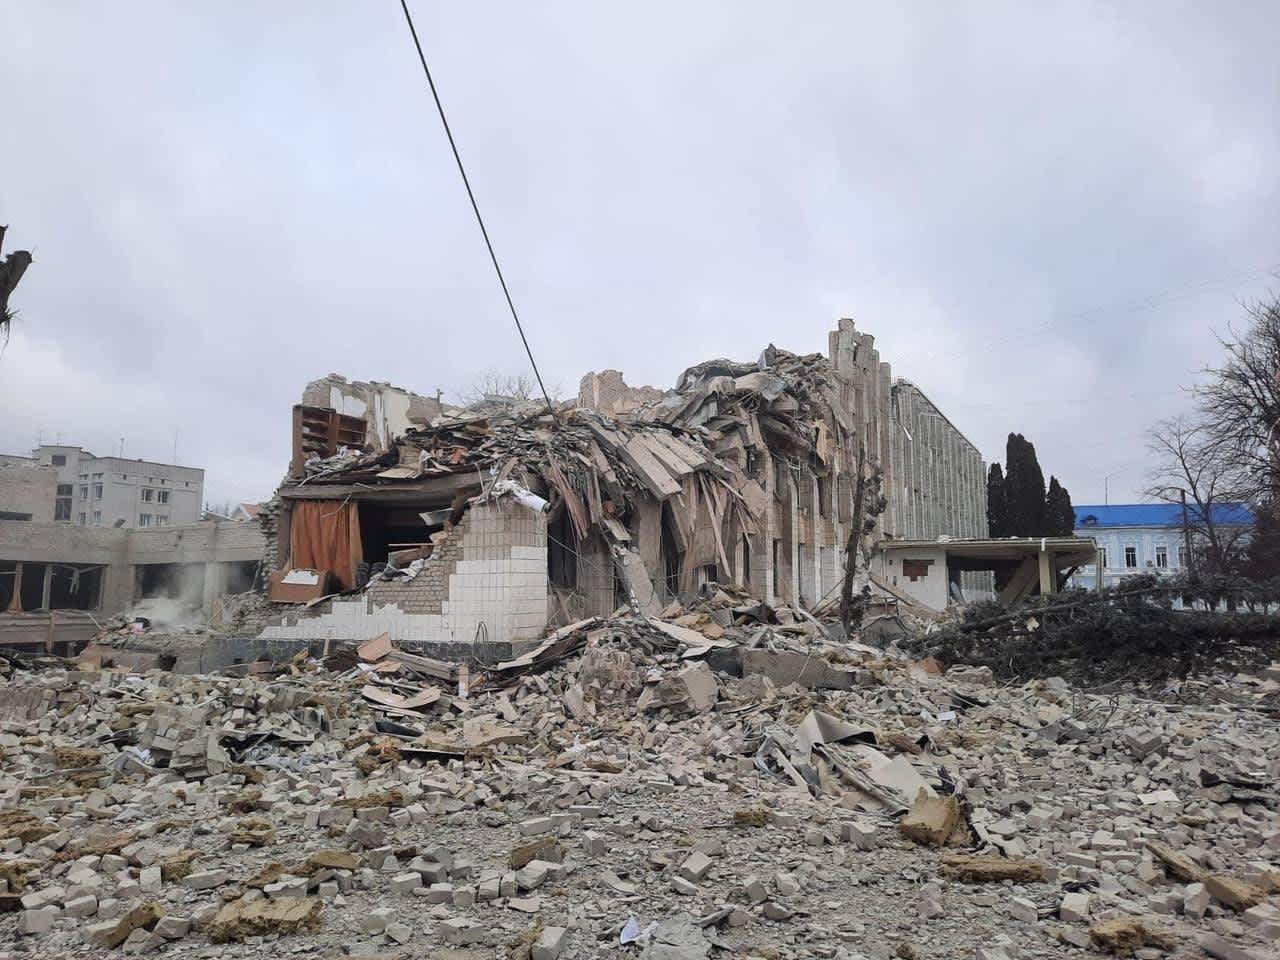 Destroyed school in Zhytomyr